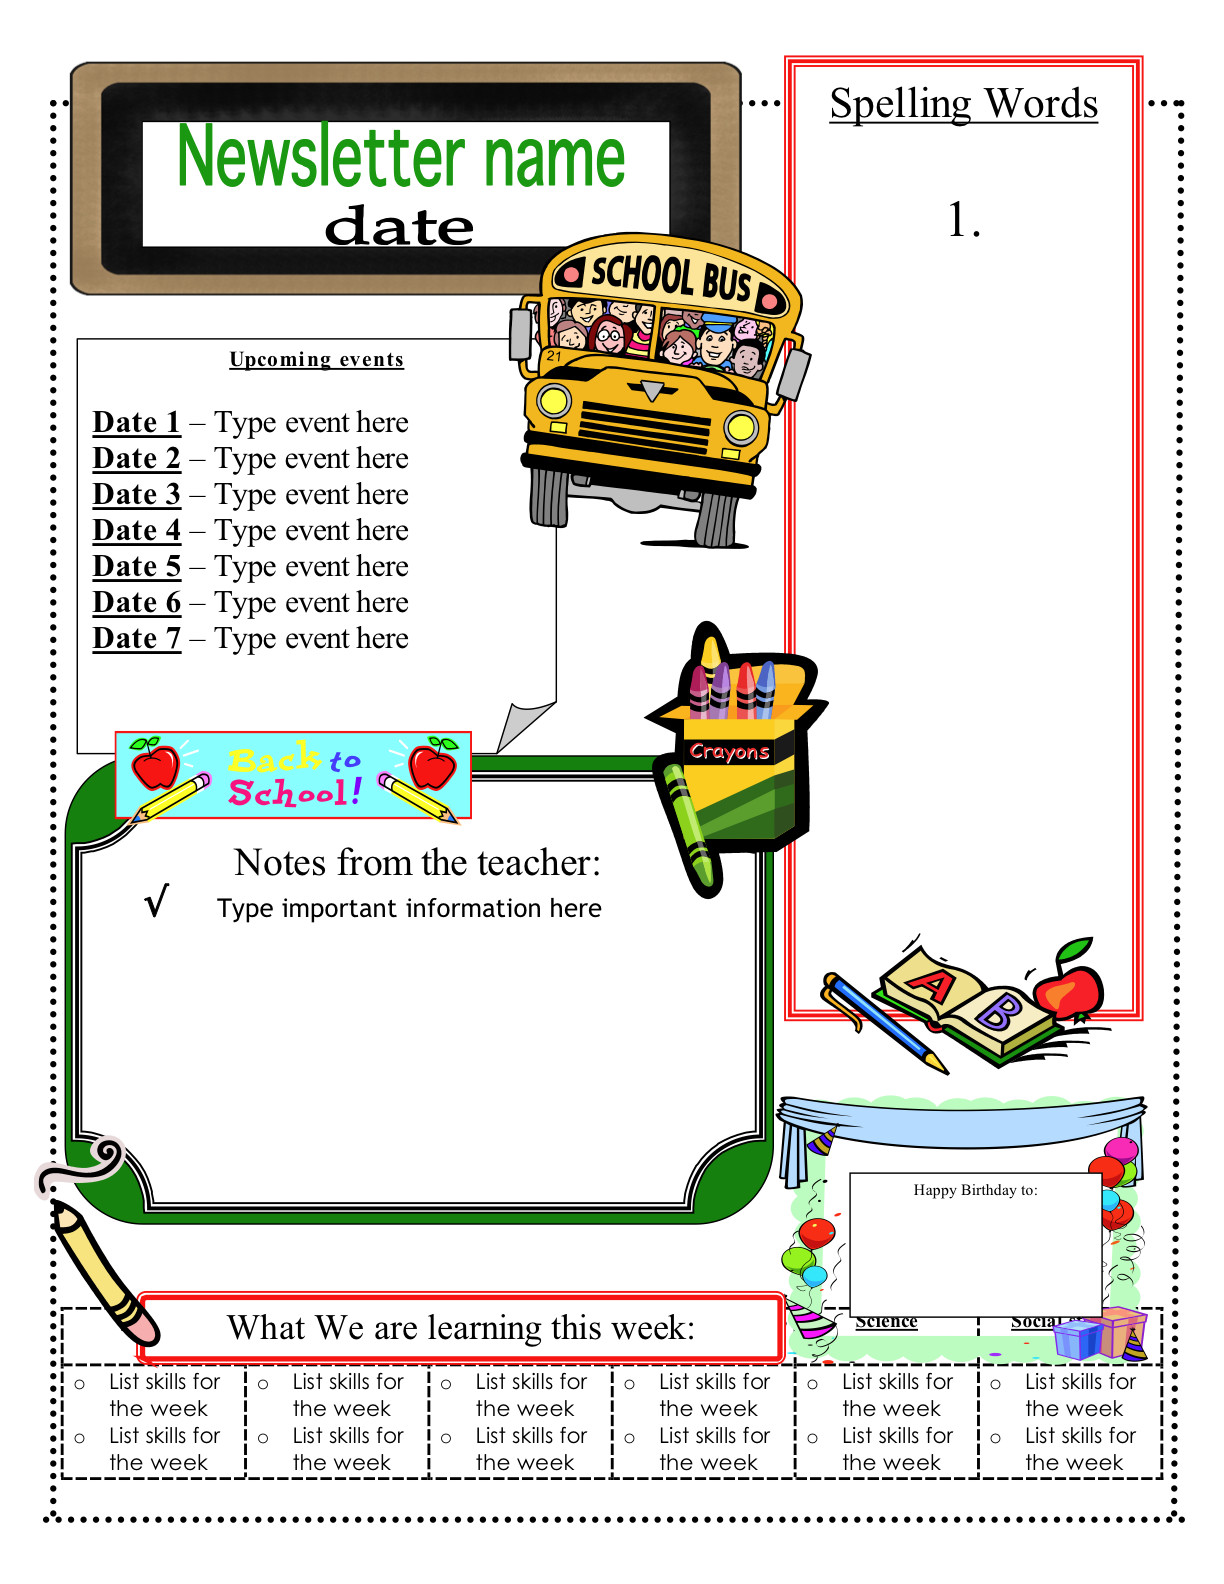 Free Teacher Newsletter Templates 3 6 Free Resources June 2012